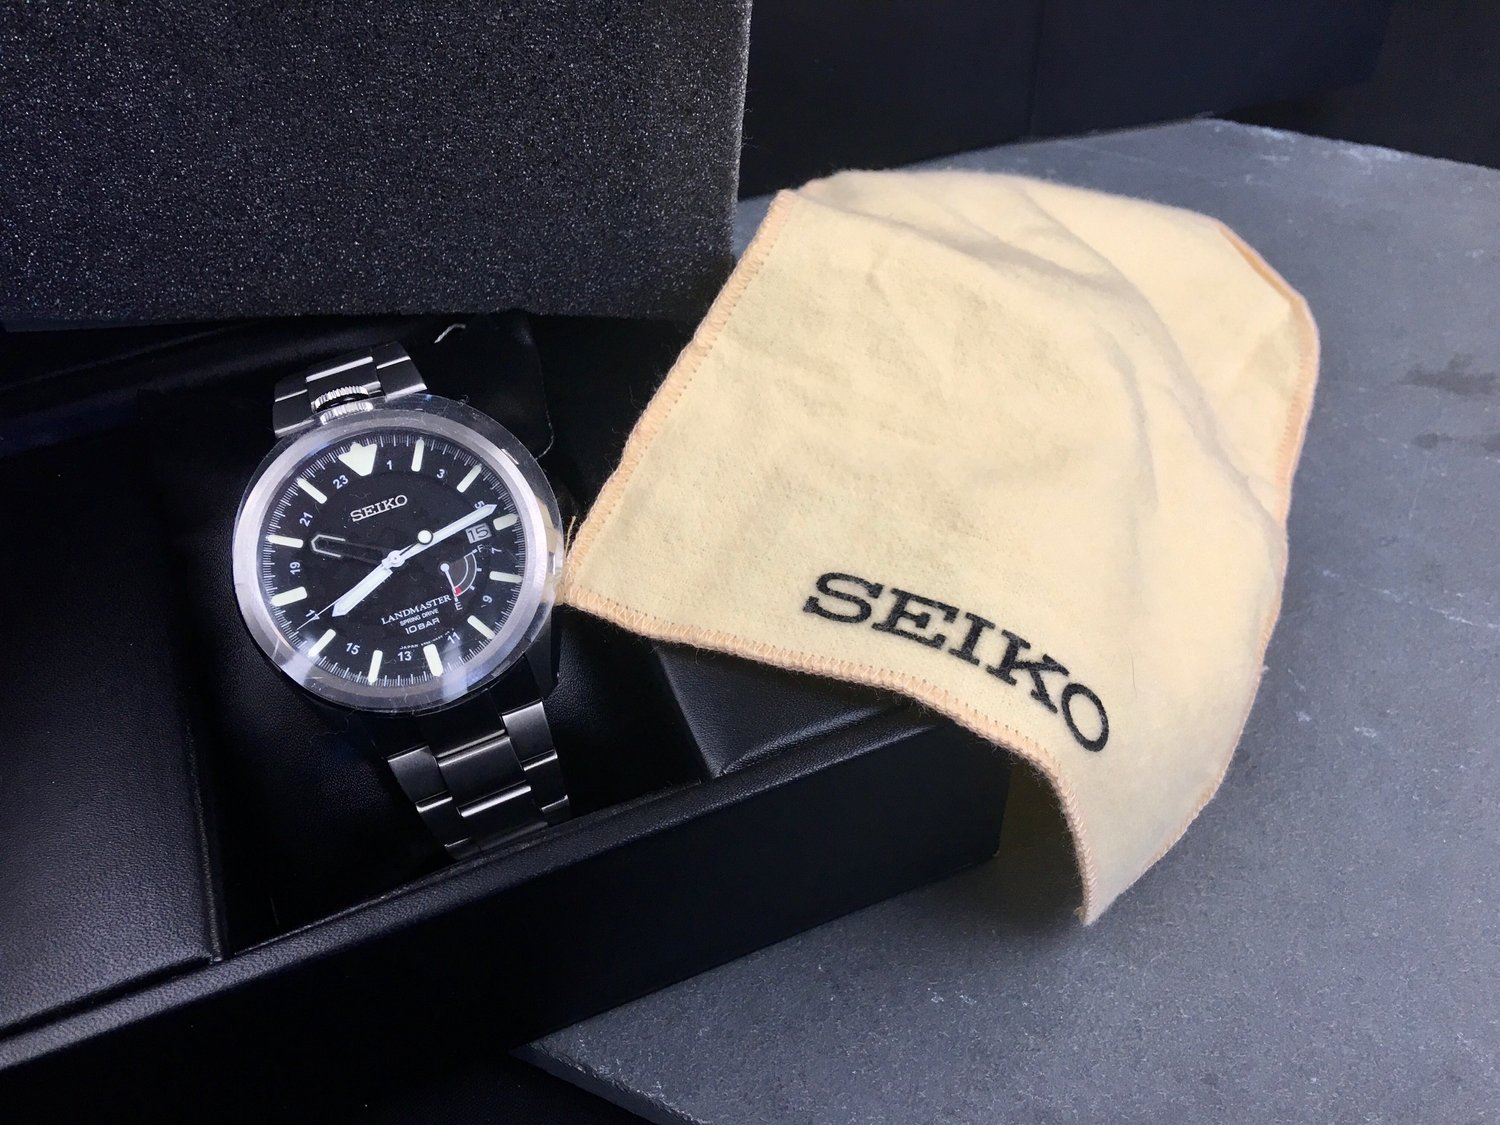 Seiko Prospex Landmaster SBDB015 — EOT Watches